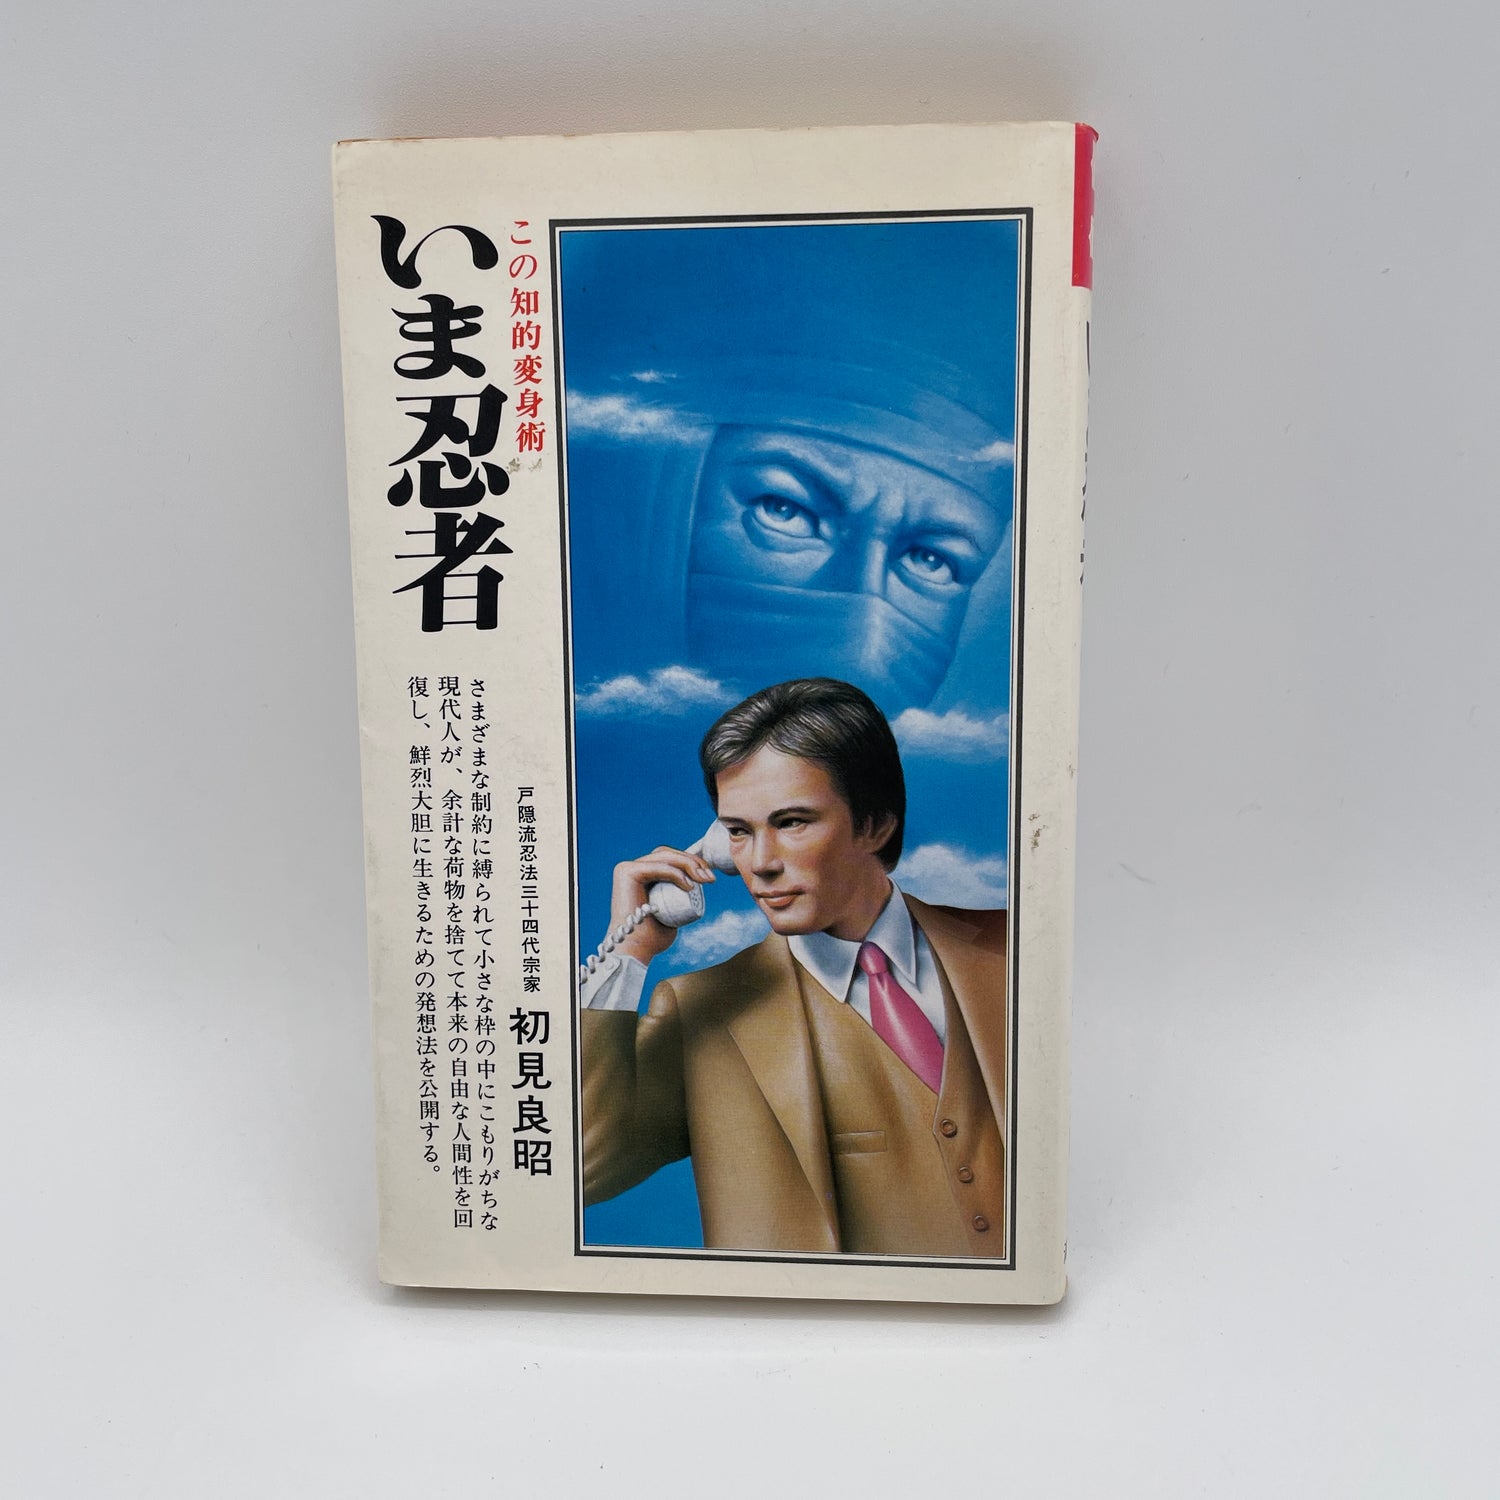 Libro Ninja moderno de Masaaki Hatsumi (Cubierta 1) (Usado)